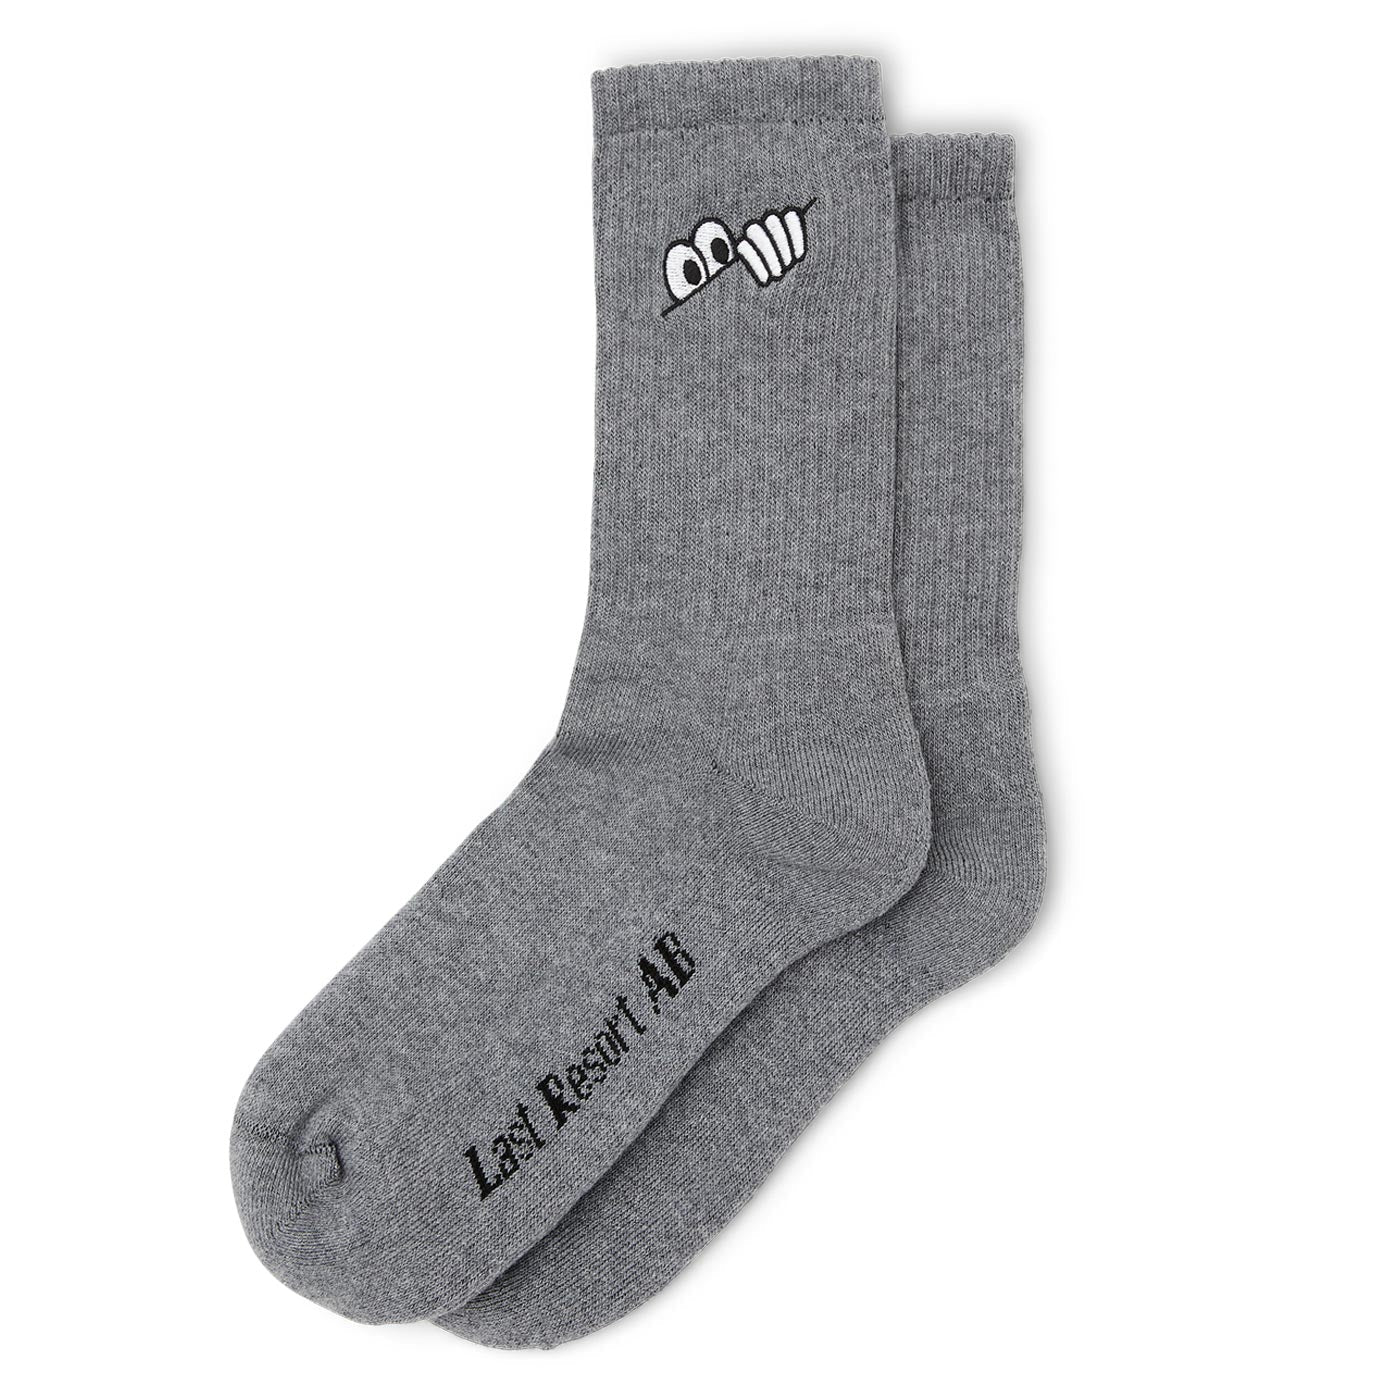 Last Resort AB Eye Socks, grey (9-12) - Tiki Room Skateboards - 1